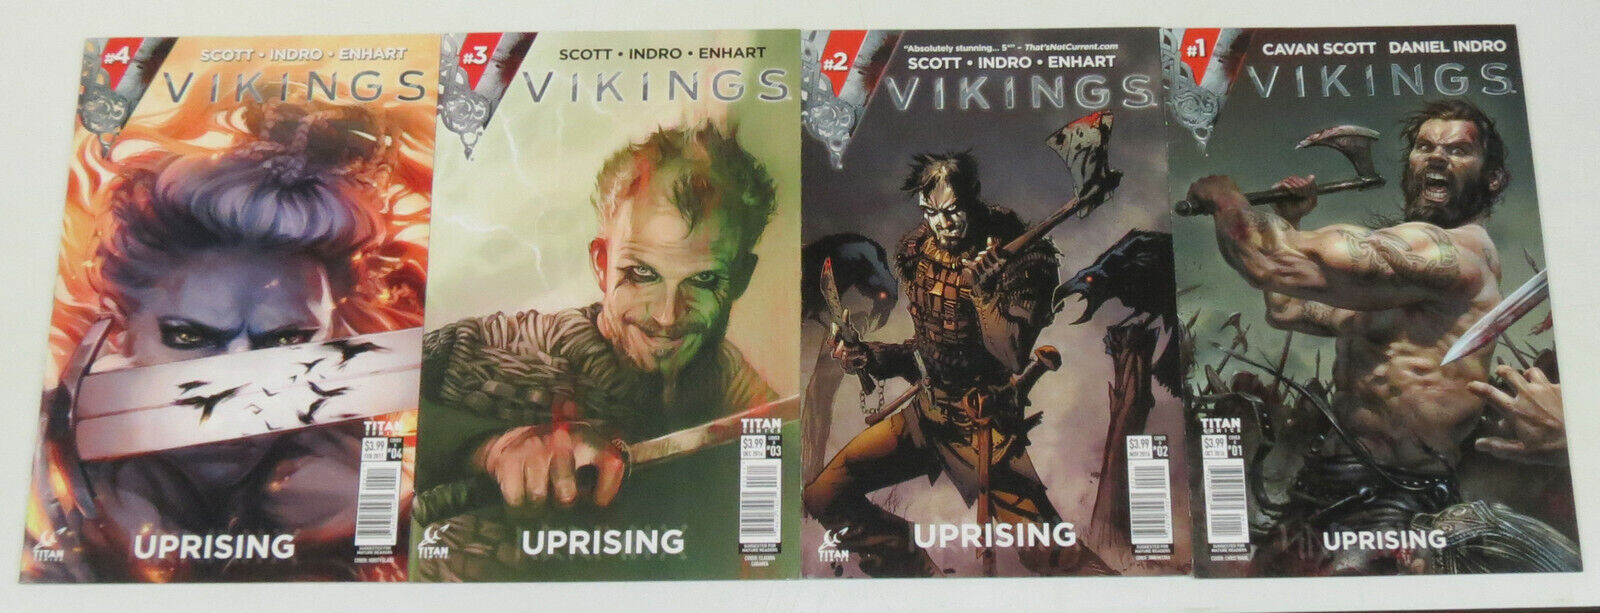 Vikings: Uprising #1-4 VF/NM complete series set during TV show Season 4 Part 1